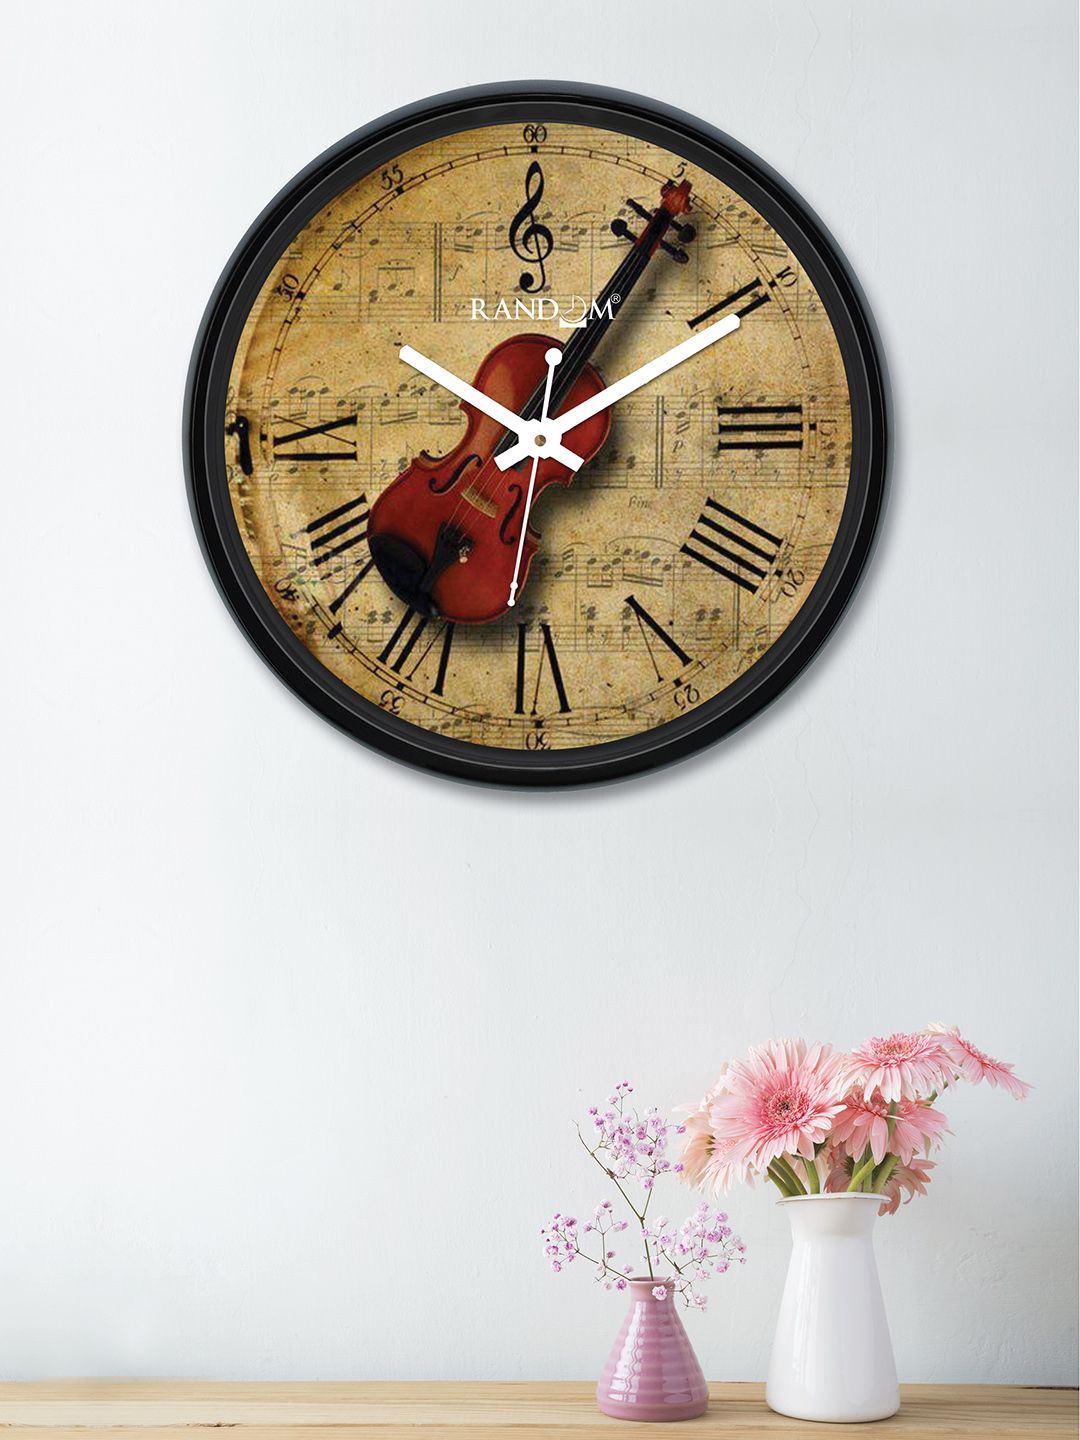 RANDOM Mustard Brown & Black Round Printed 30 cm Analogue Wall Clock Price in India